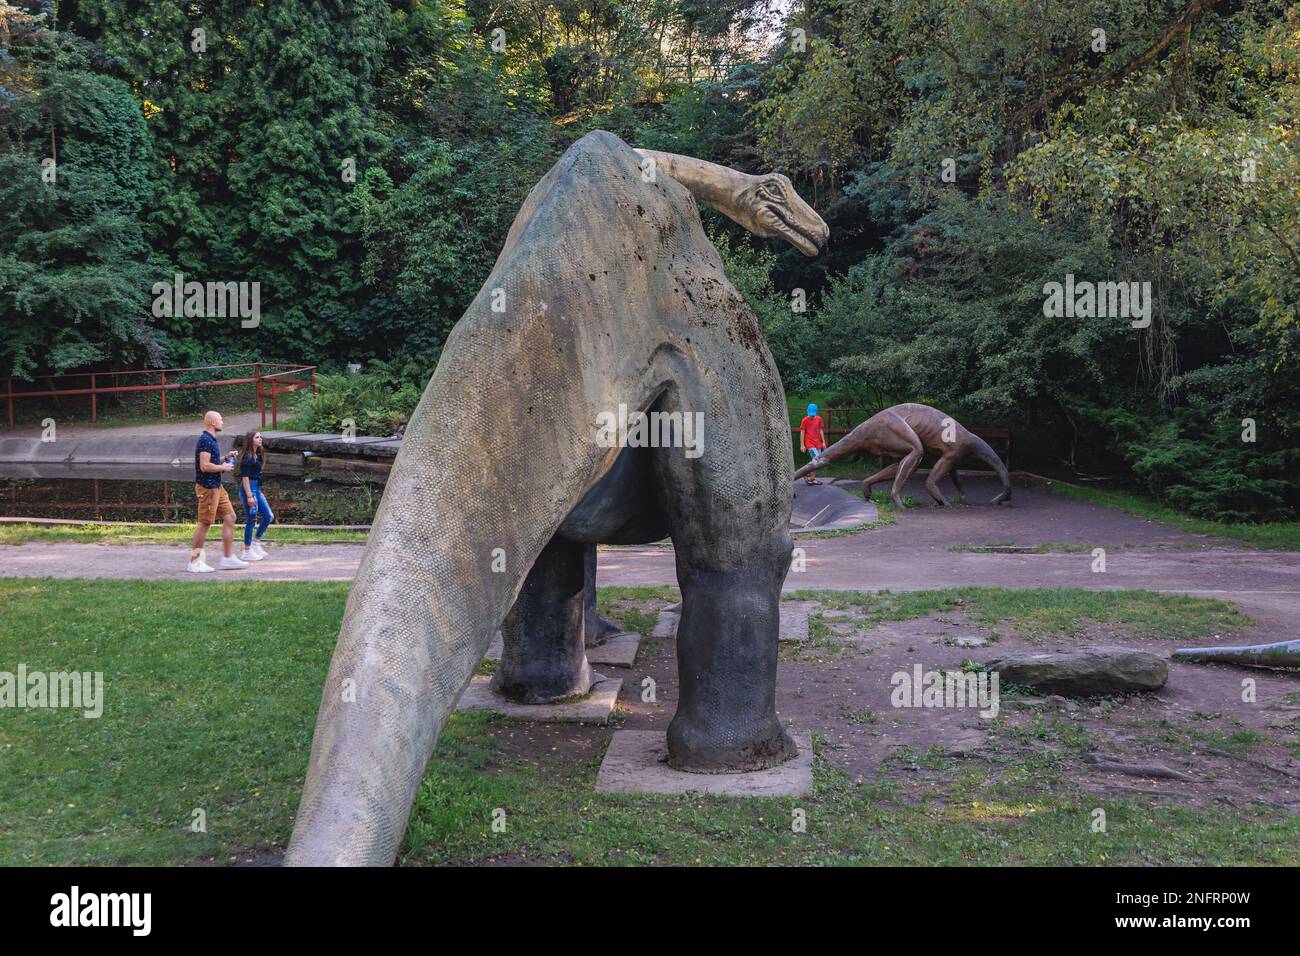 Statue of Sauropod in Dinosaur Valley in Silesian Zoological Garden, Chorzow city, Silesia region of Poland Stock Photo